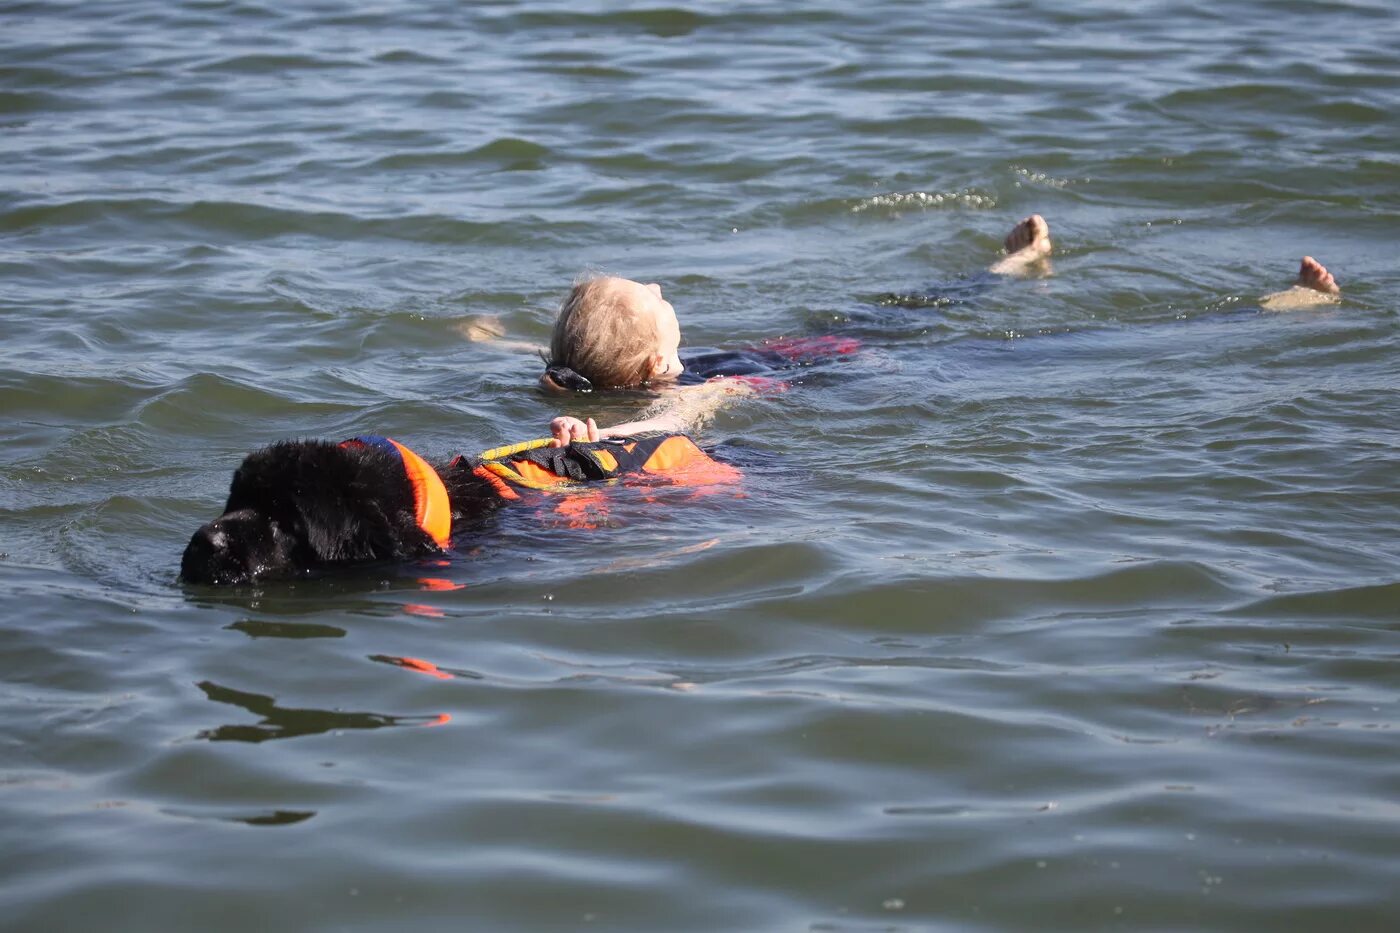 Спасутся люди видео. Водолаз ньюфаундленд спасатель. Собака спасатель ньюфаундленд. Ньюфаундленд собака спасает людей. Собака спасатель на воде ньюфаундленд.